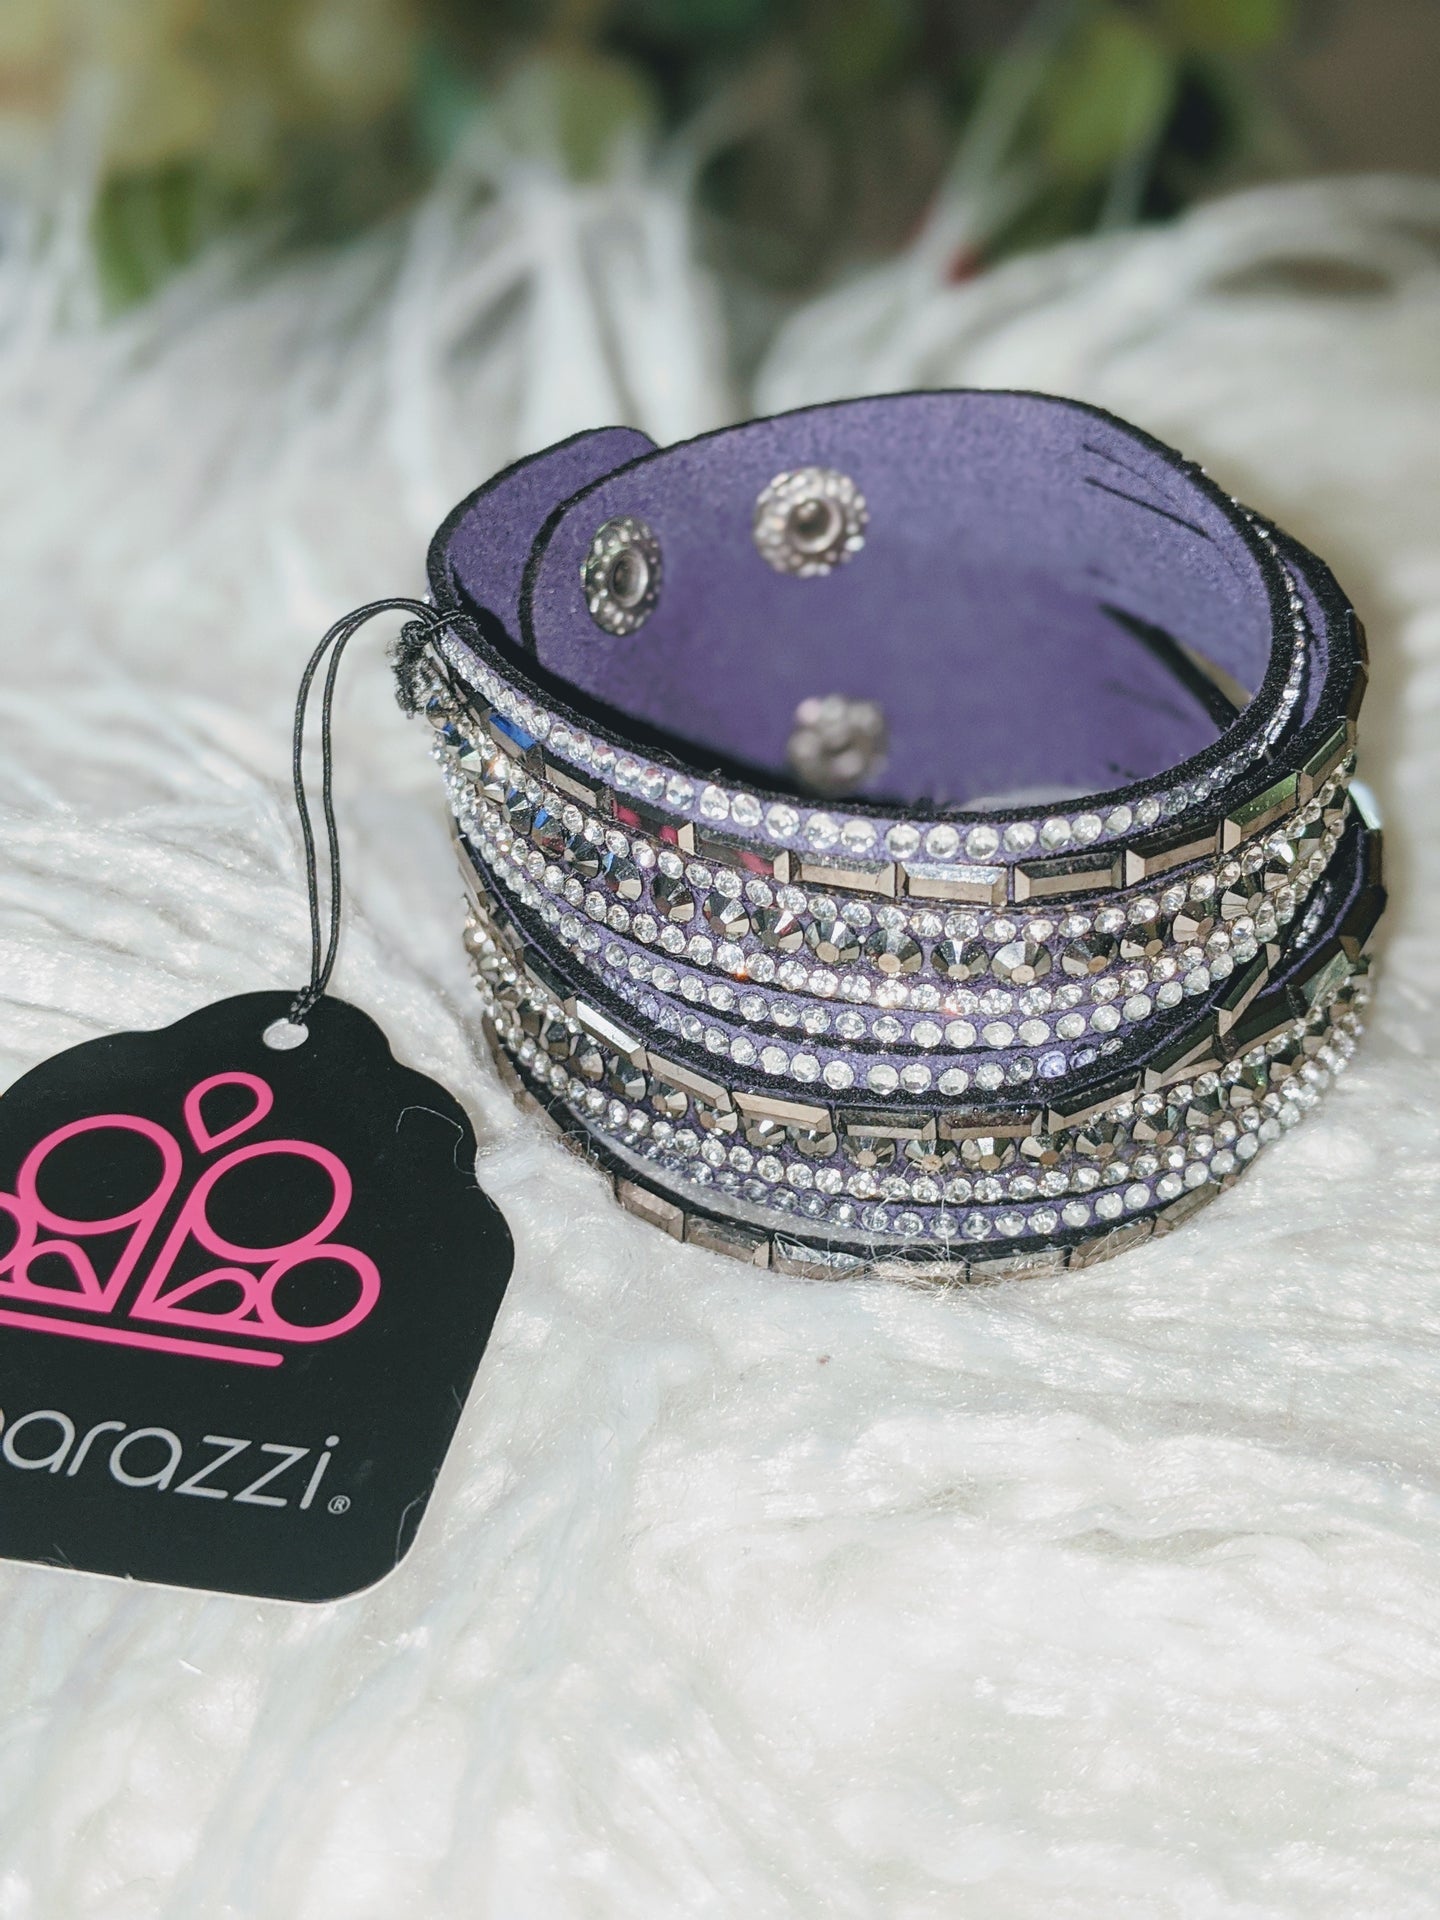 Prince - VJ Bedazzled Jewelry